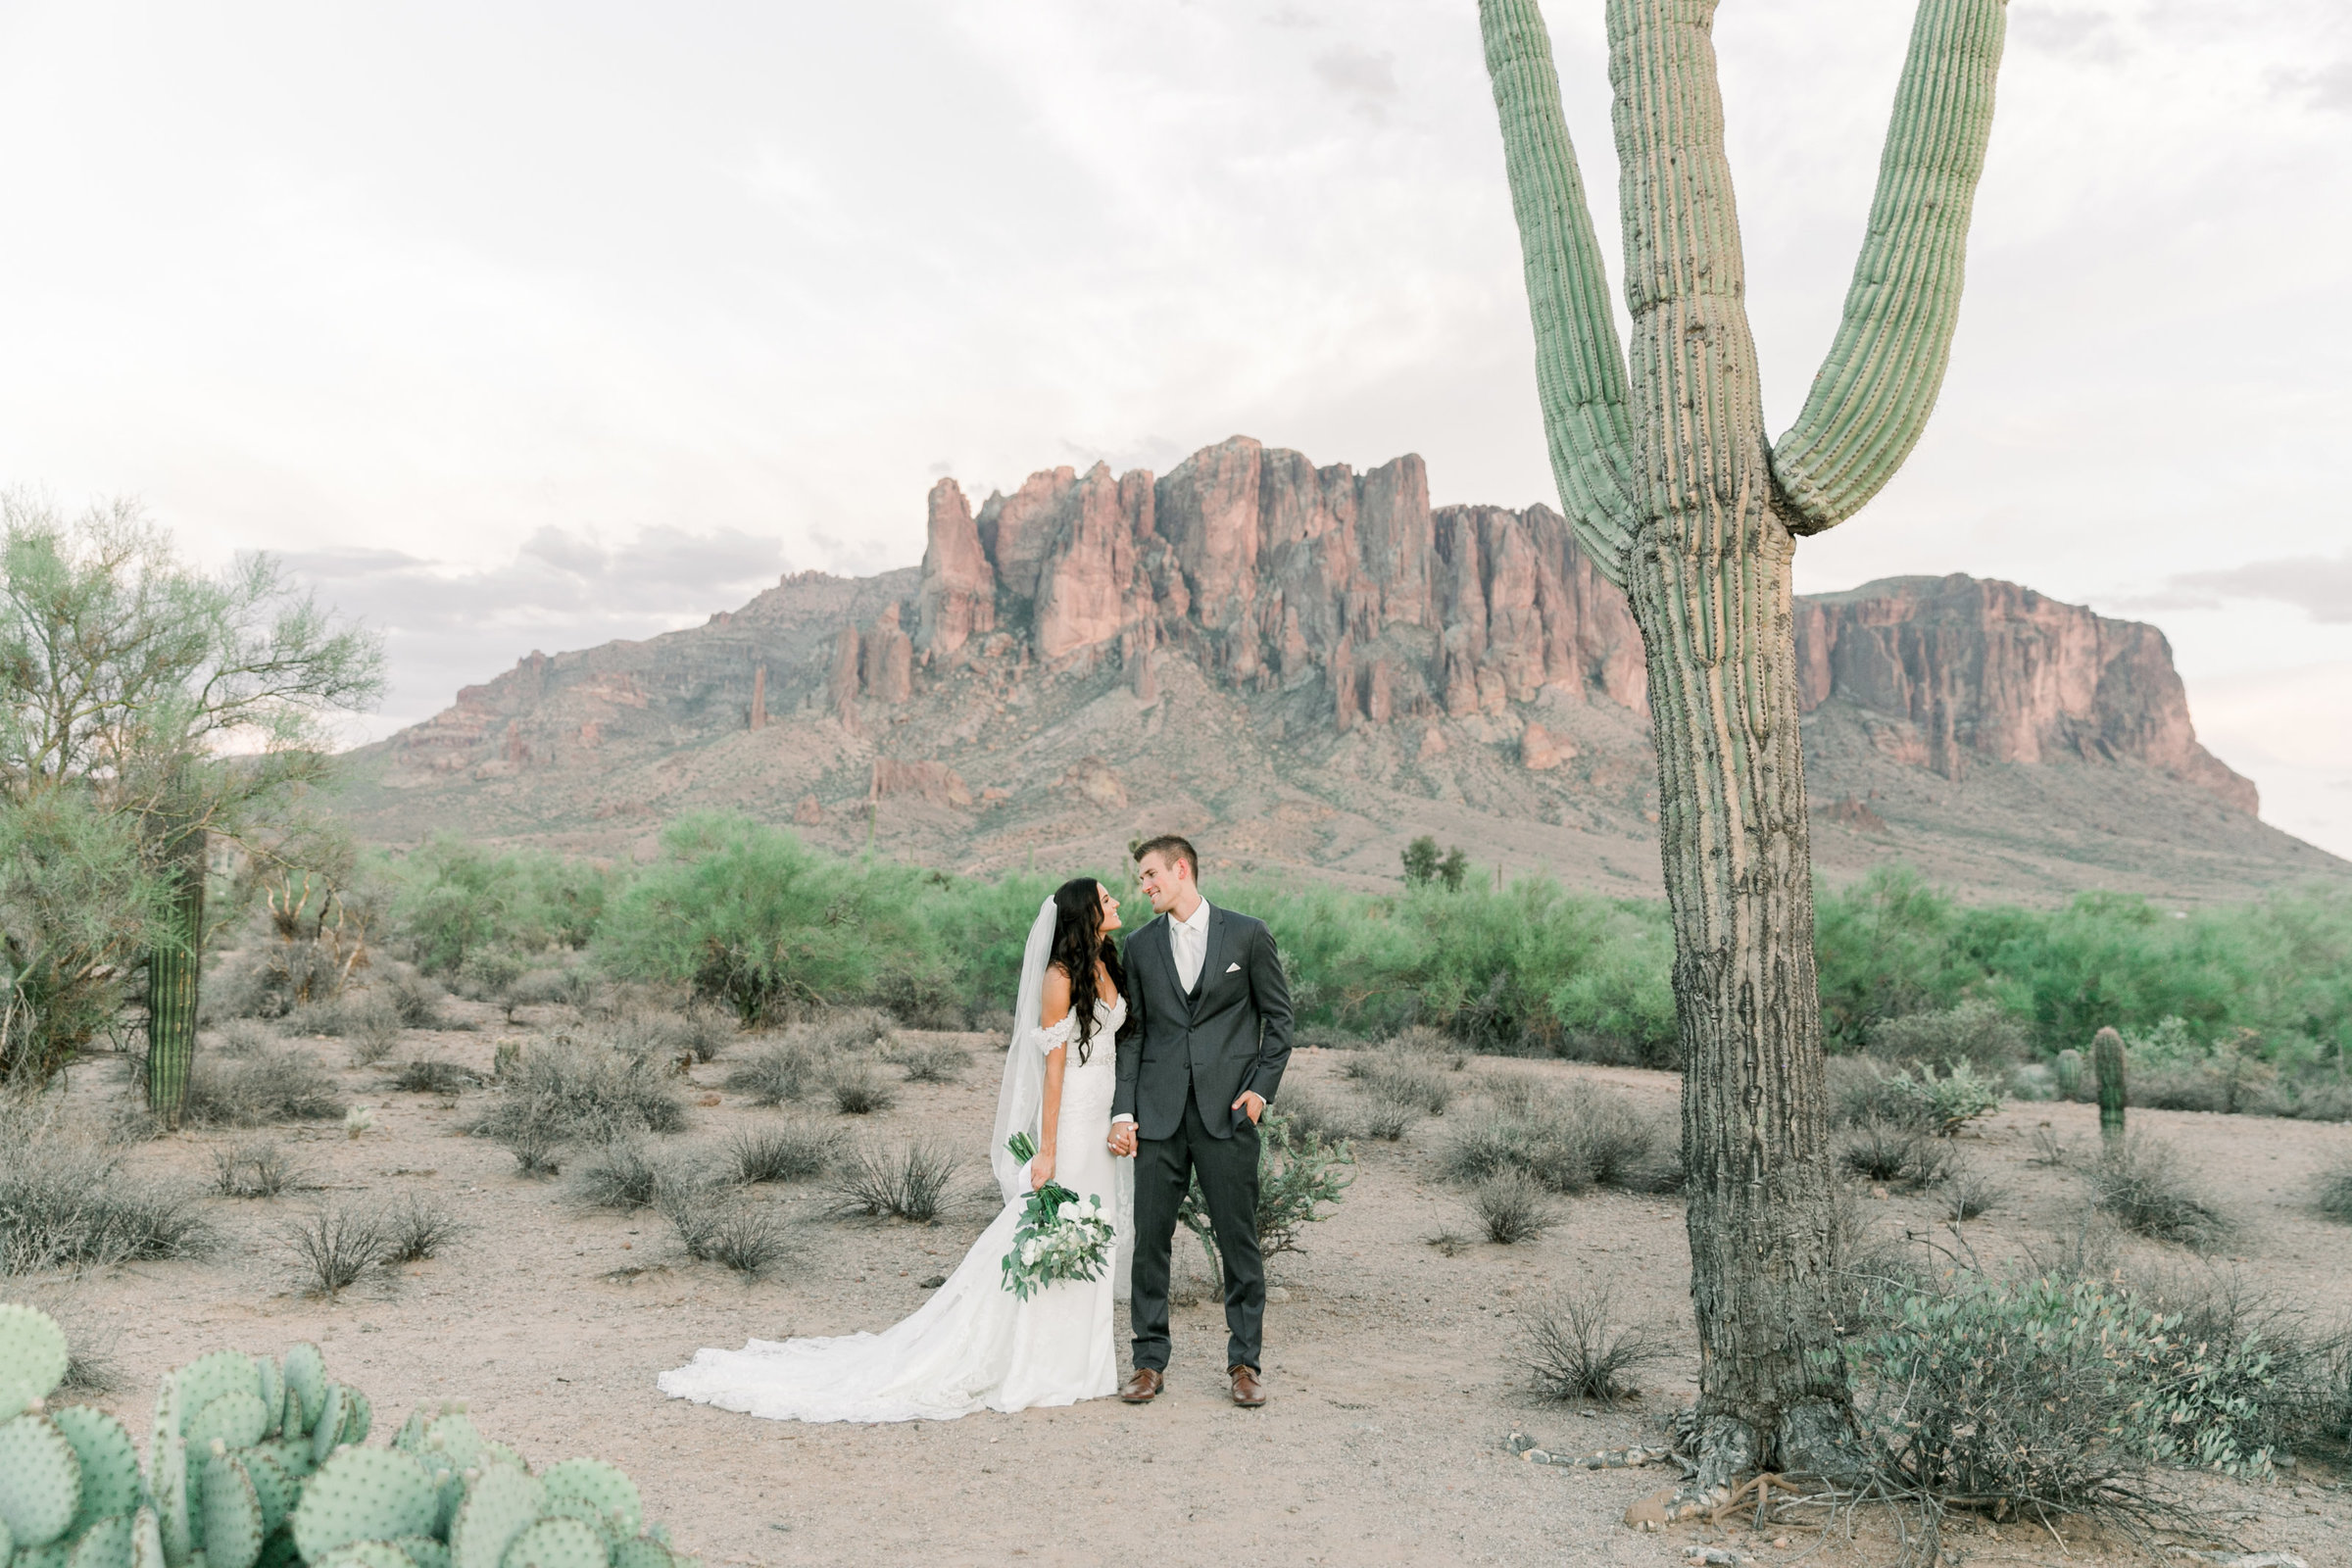 Karlie Colleen Photography - Arizona Wedding - The Paseo Venue - Jackie & Ryan -693